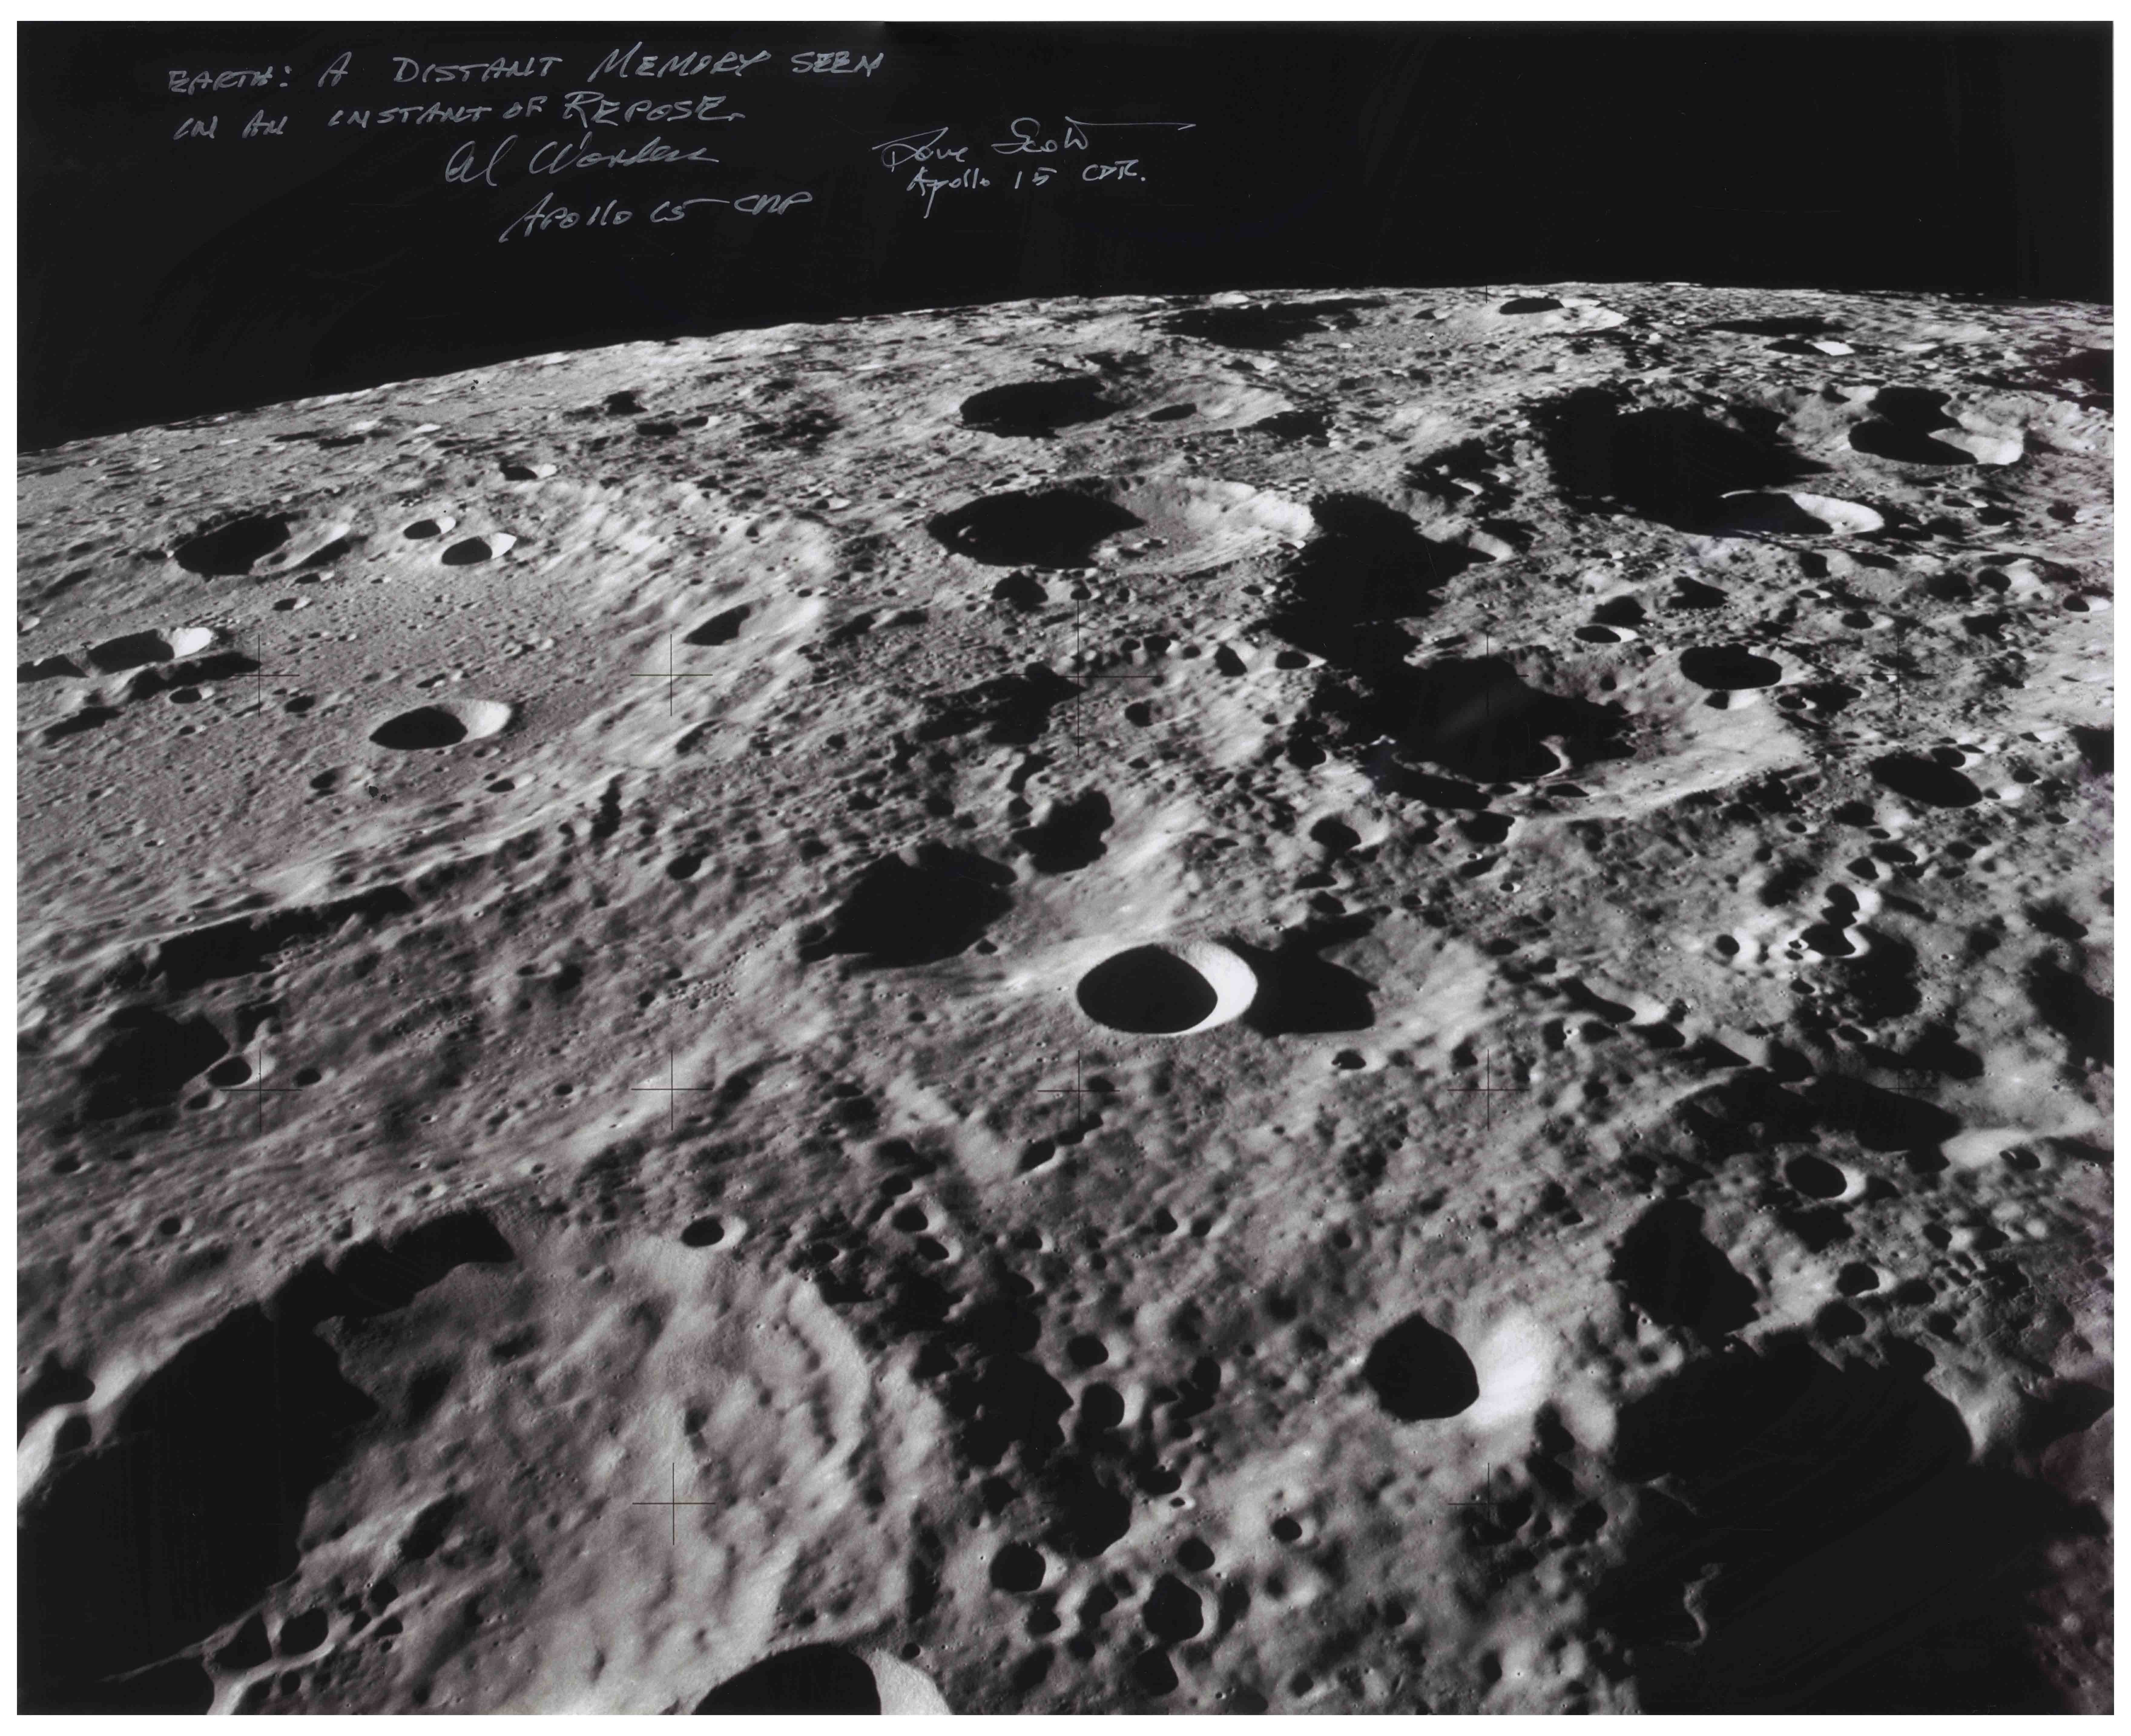 Как выглядит дом на луне. Дедал (лунный кратер). Метеоритные кратеры на Луне. Поверхность Луны кратеры. Снимки поверхности Луны.